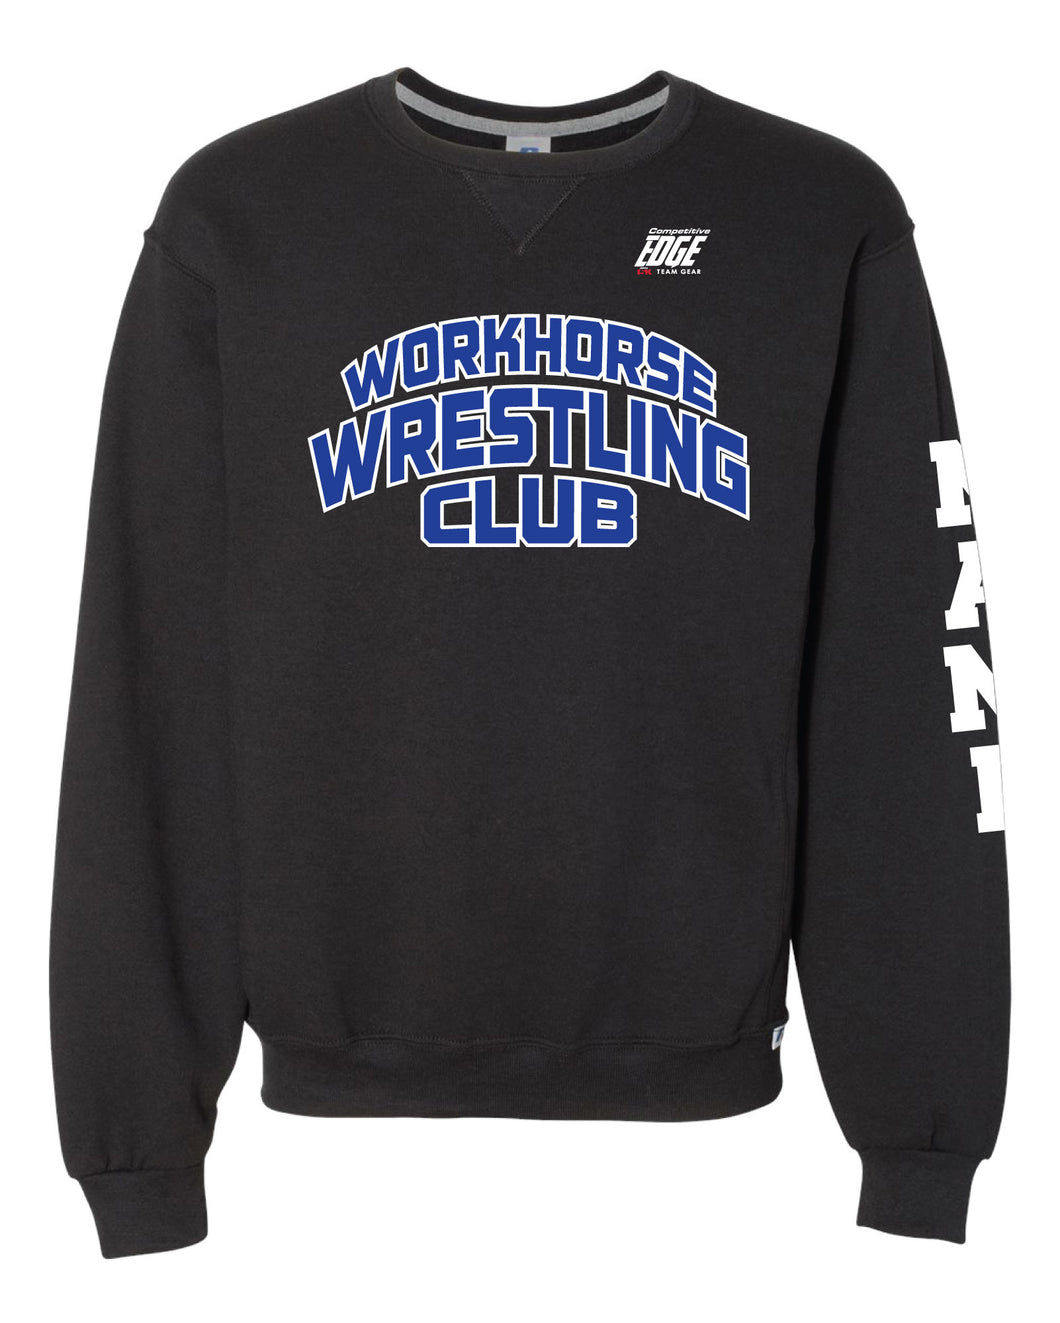 Workhorse Wrestling Club Russell Athletic Cotton Crewneck Sweatshirt - Black - 5KounT2018